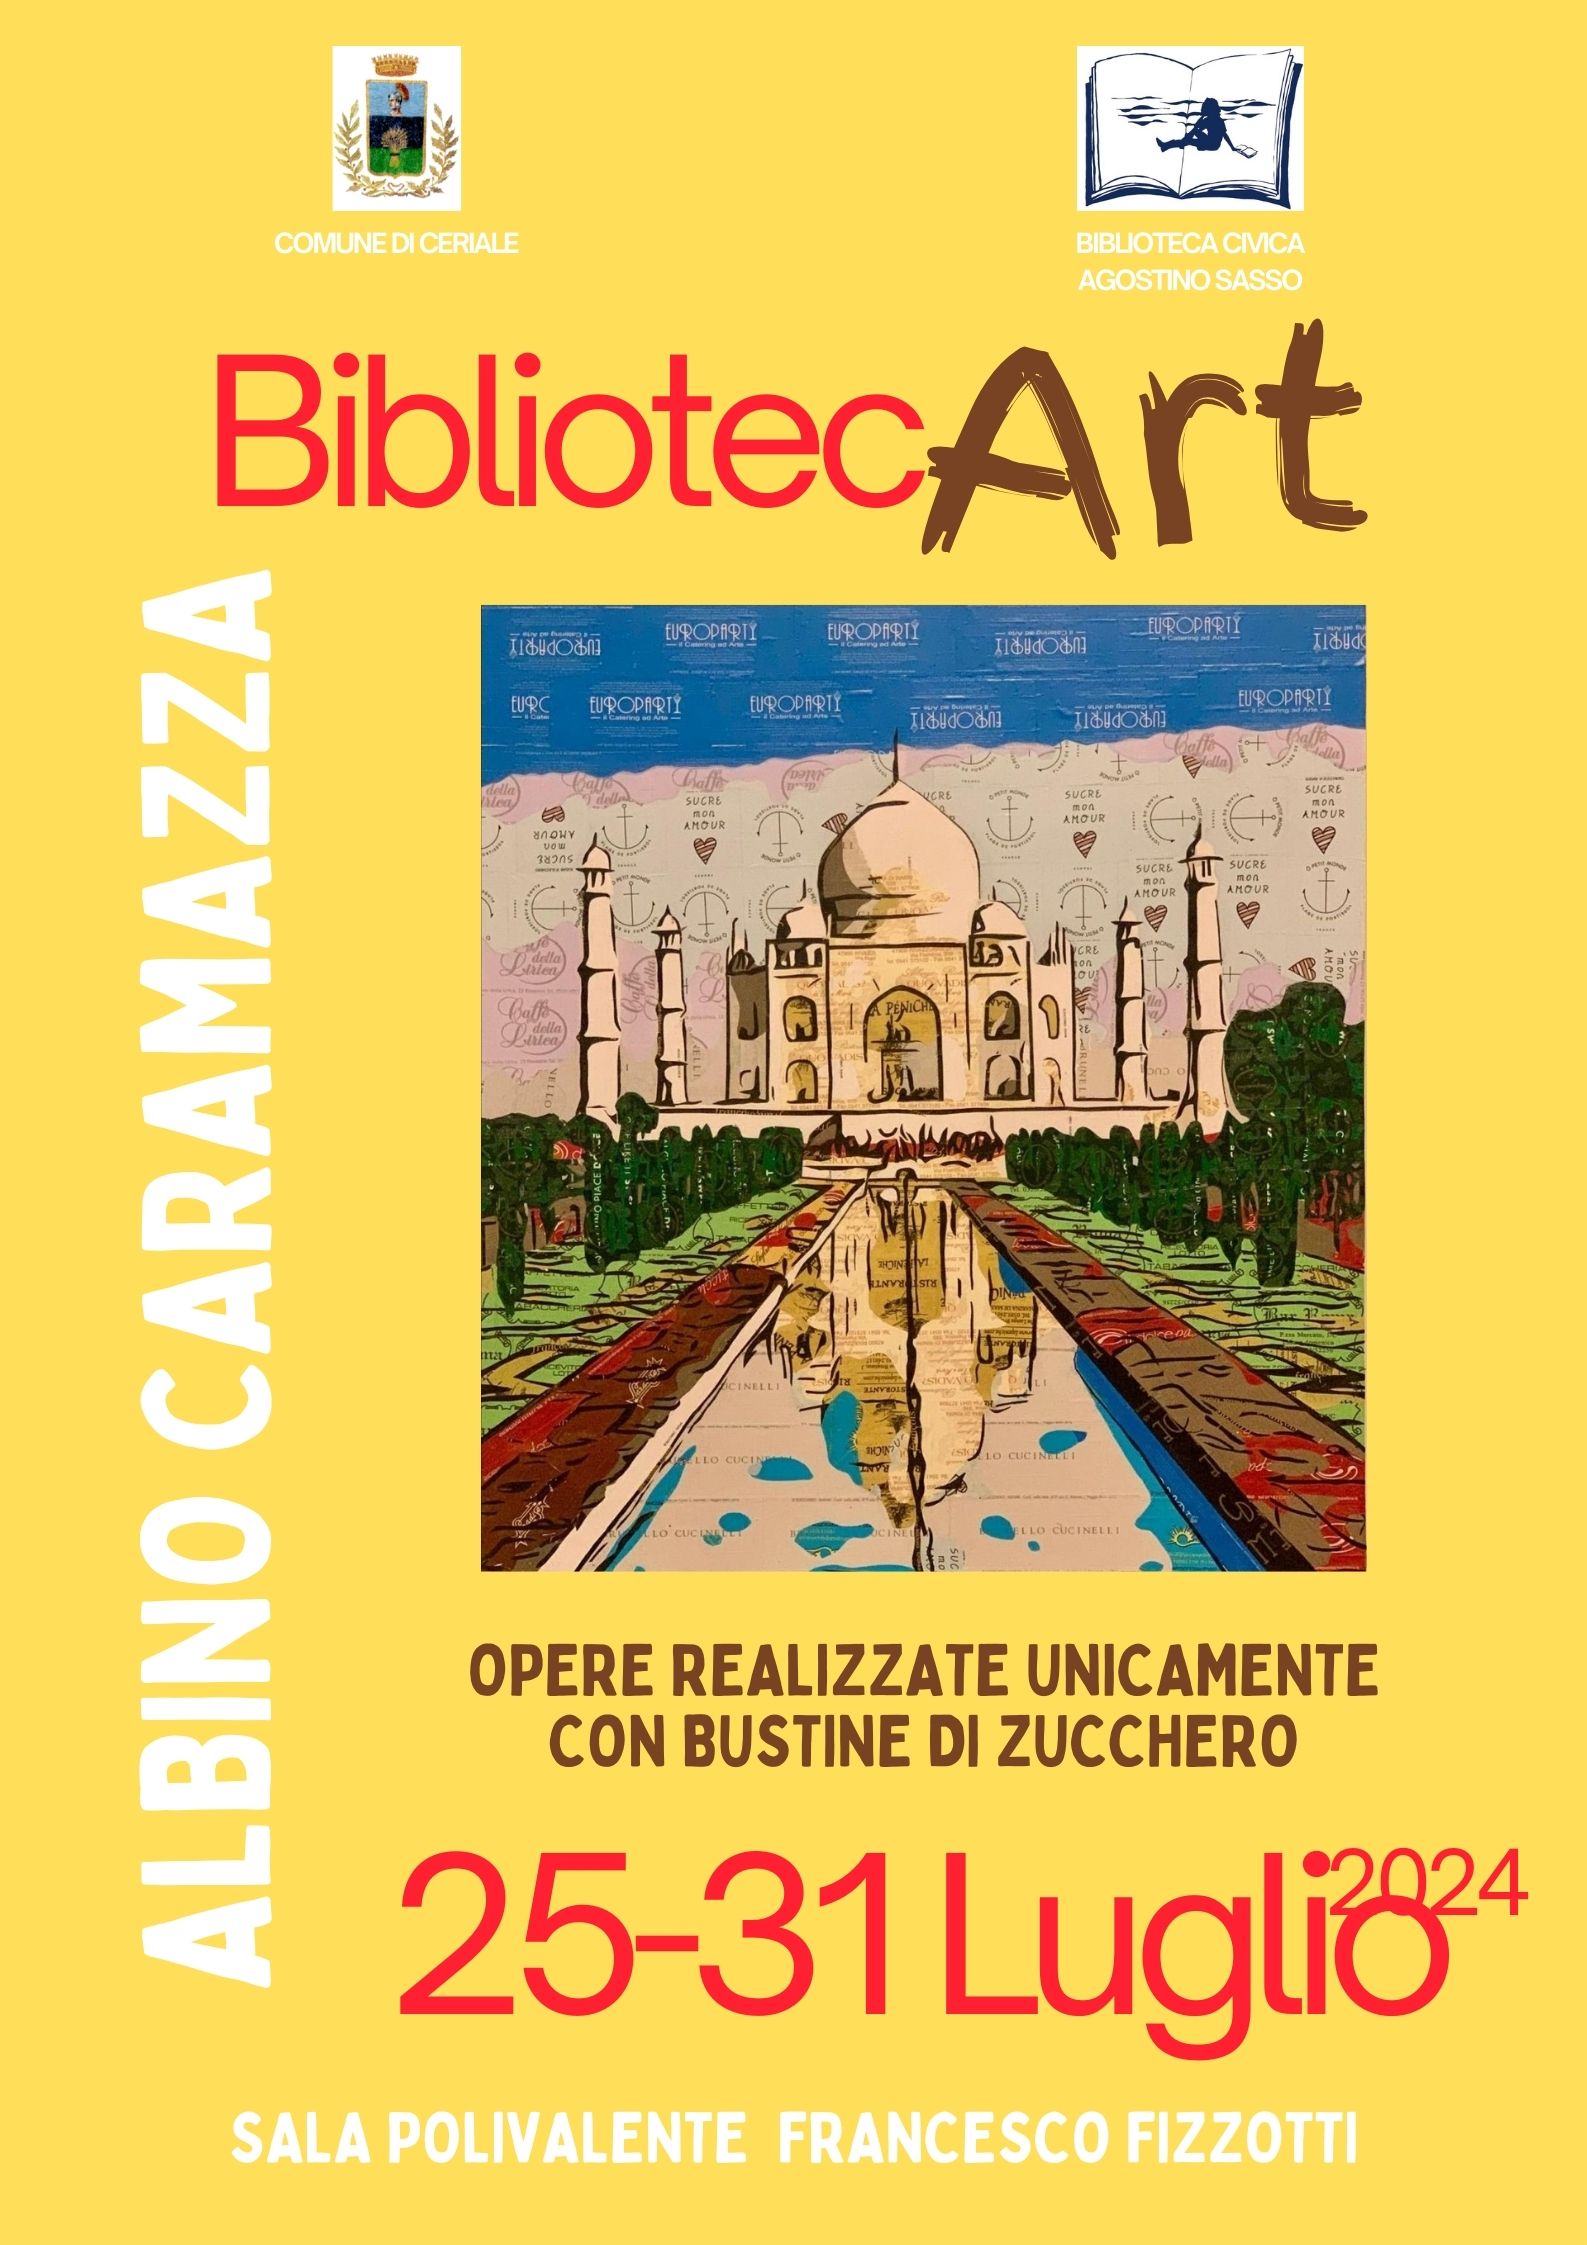 BibliotecArt - Albino Caramazza